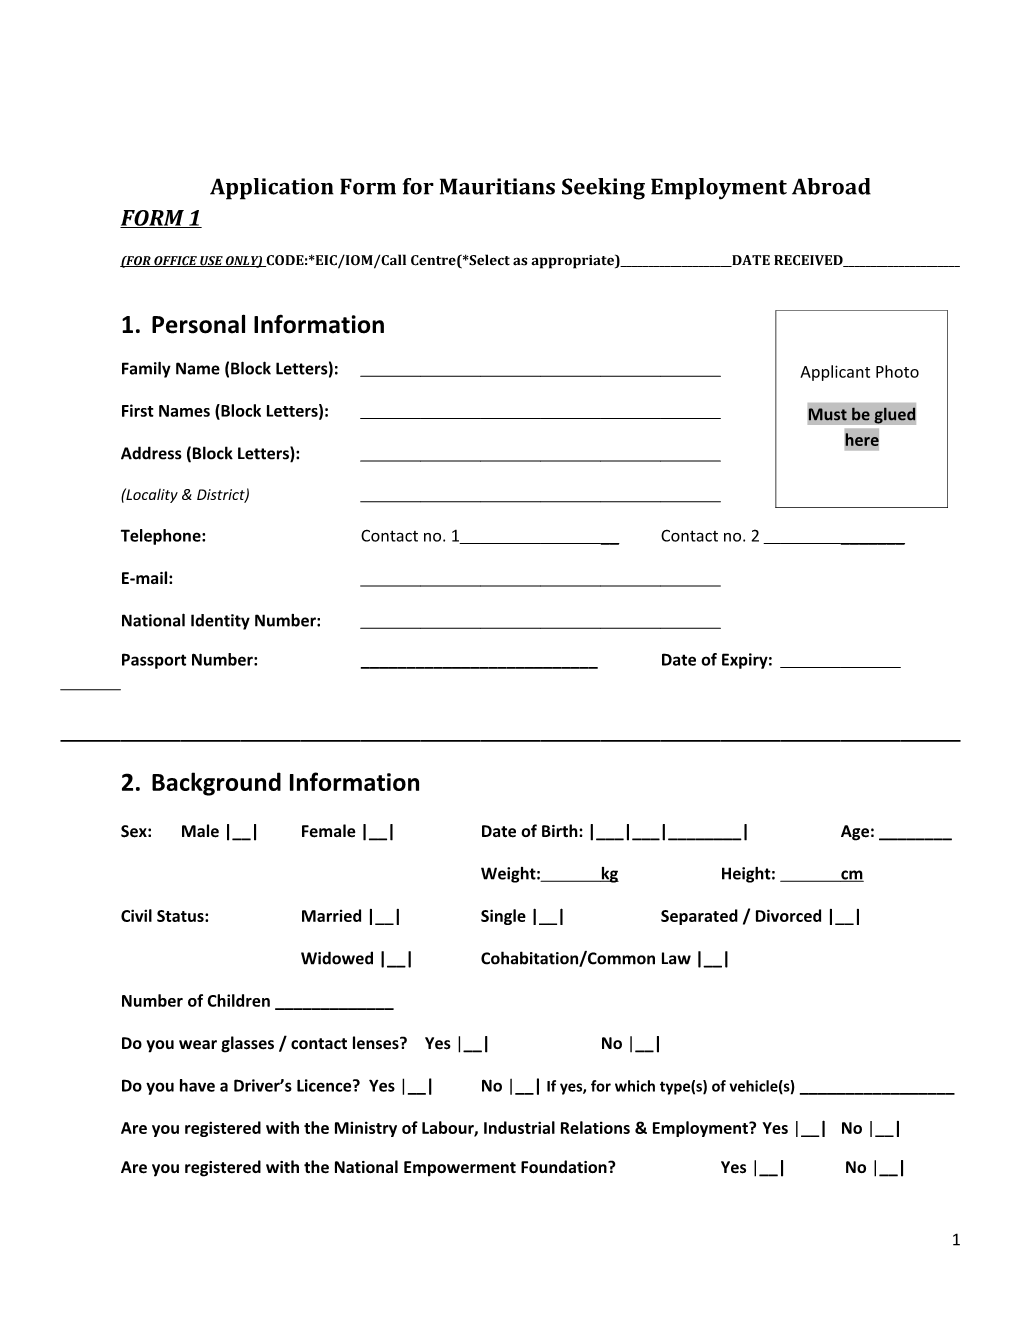 Application Form for Mauritians Seeking Employment Abroad